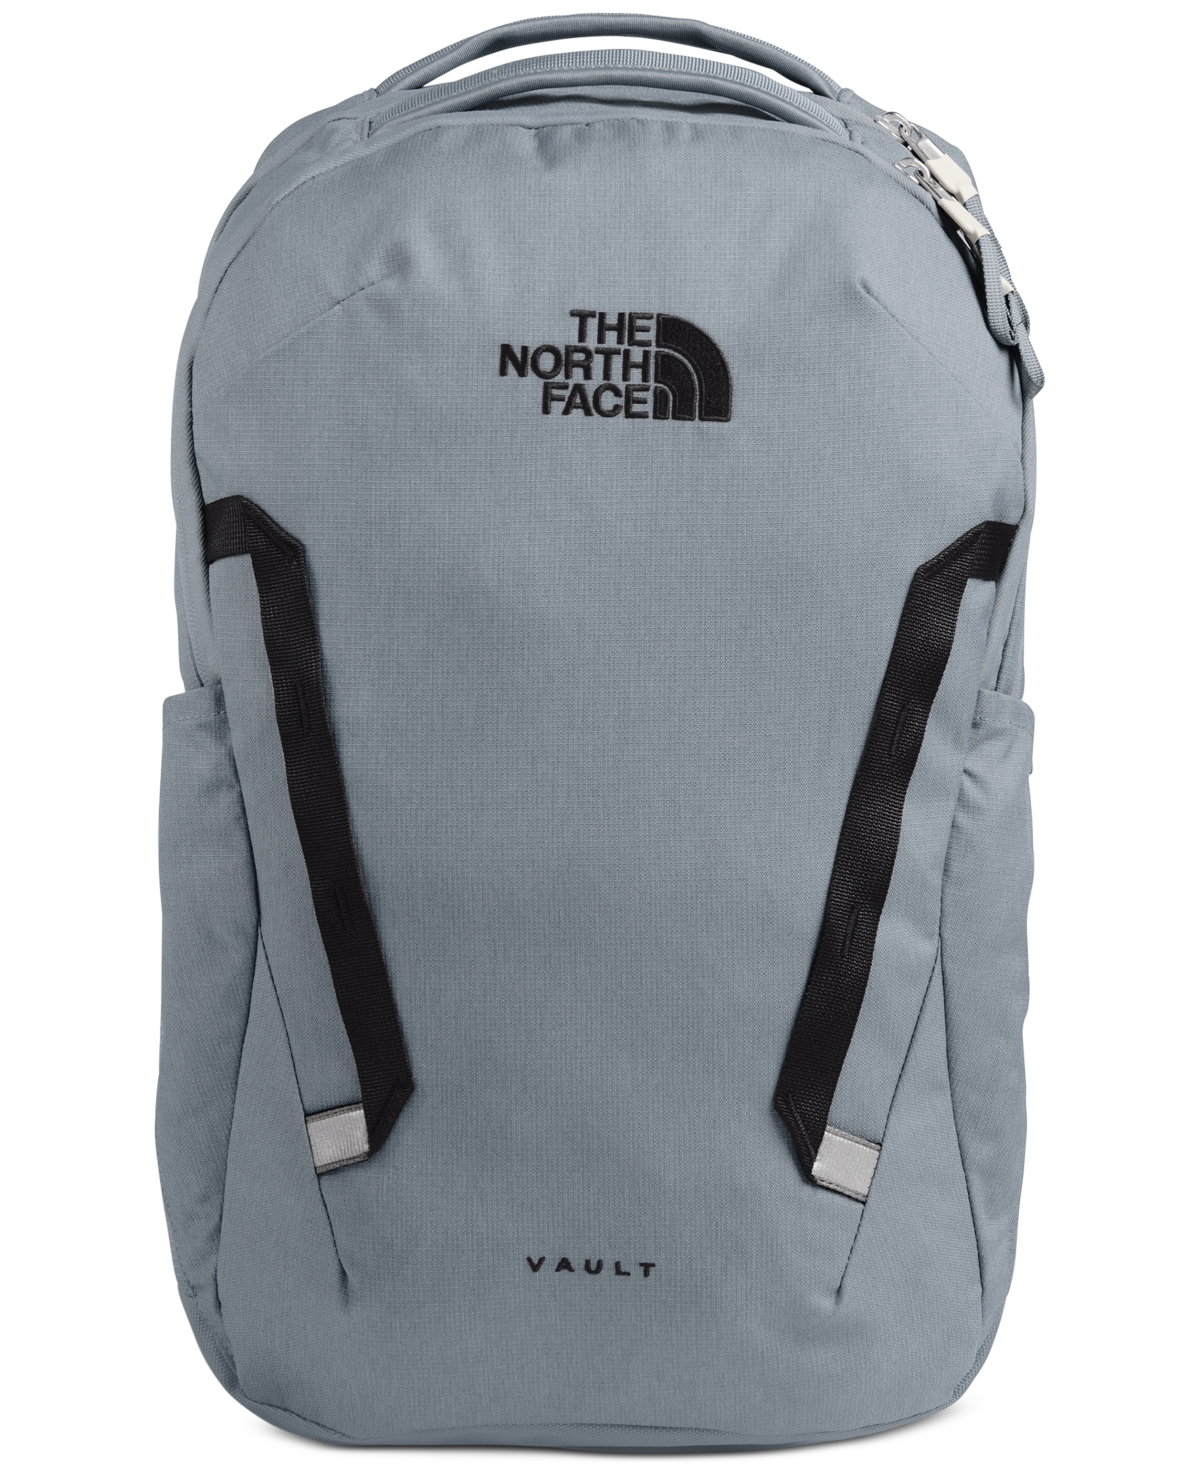 The North Face Men's Vault Backpack In Mid Grey Dark Heather,tnf Black